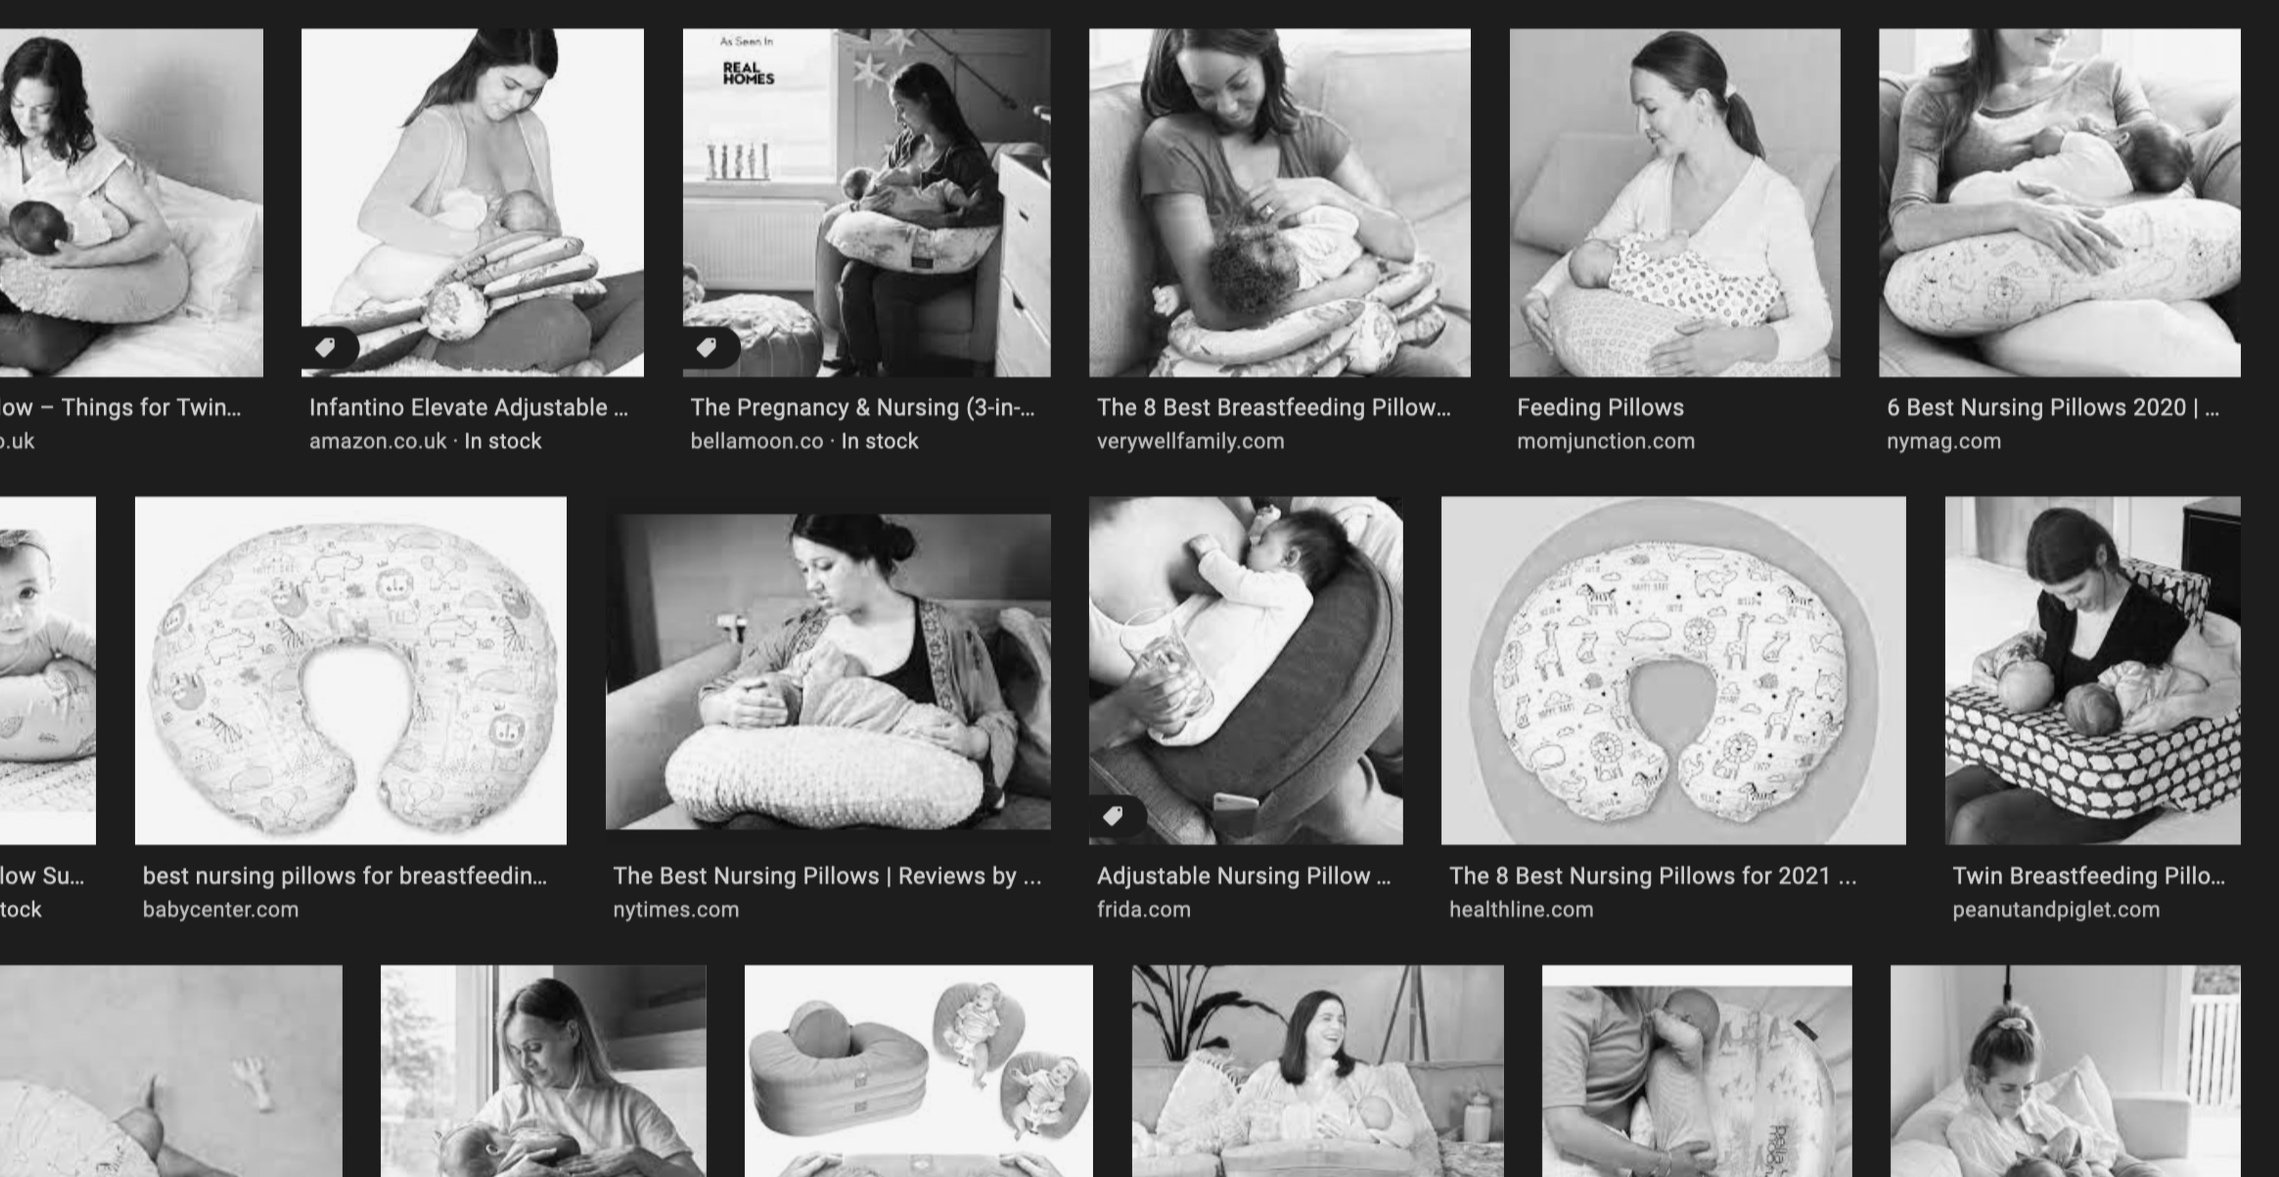 https://images.squarespace-cdn.com/content/v1/61026fa5b91c677c6153a981/5f28457e-e739-4f38-b5a8-1a45cbdbbe44/What%27s+the+best+breastfeeding+pillow%3F+Sally+Rickard+London+lactation+consultant